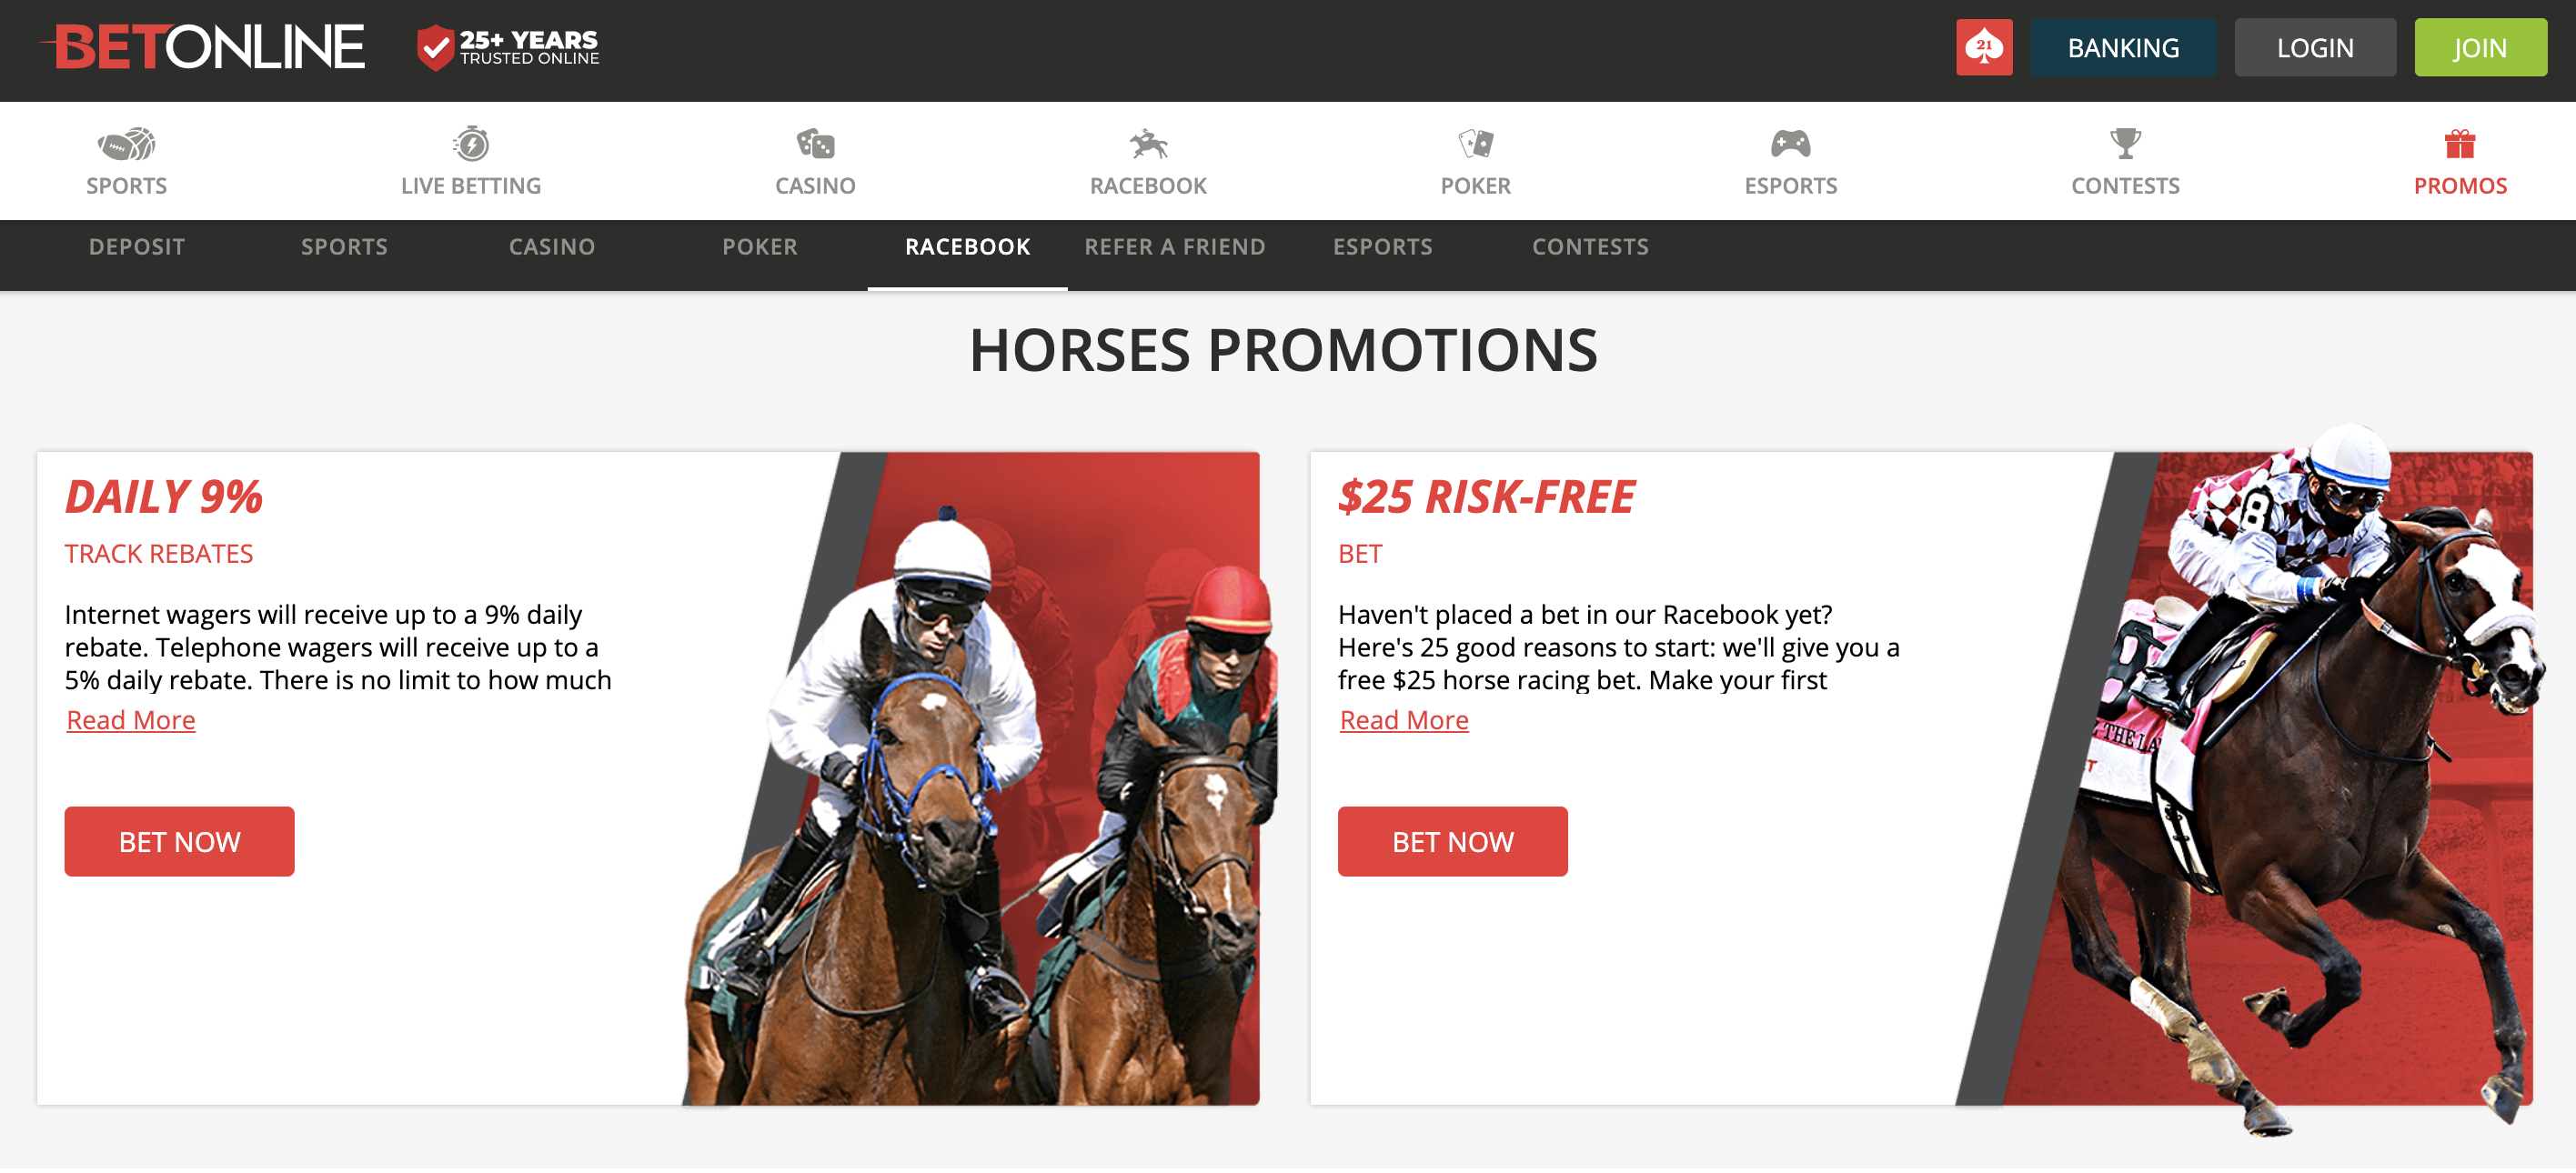 BetOnline Horse Racing Promotions